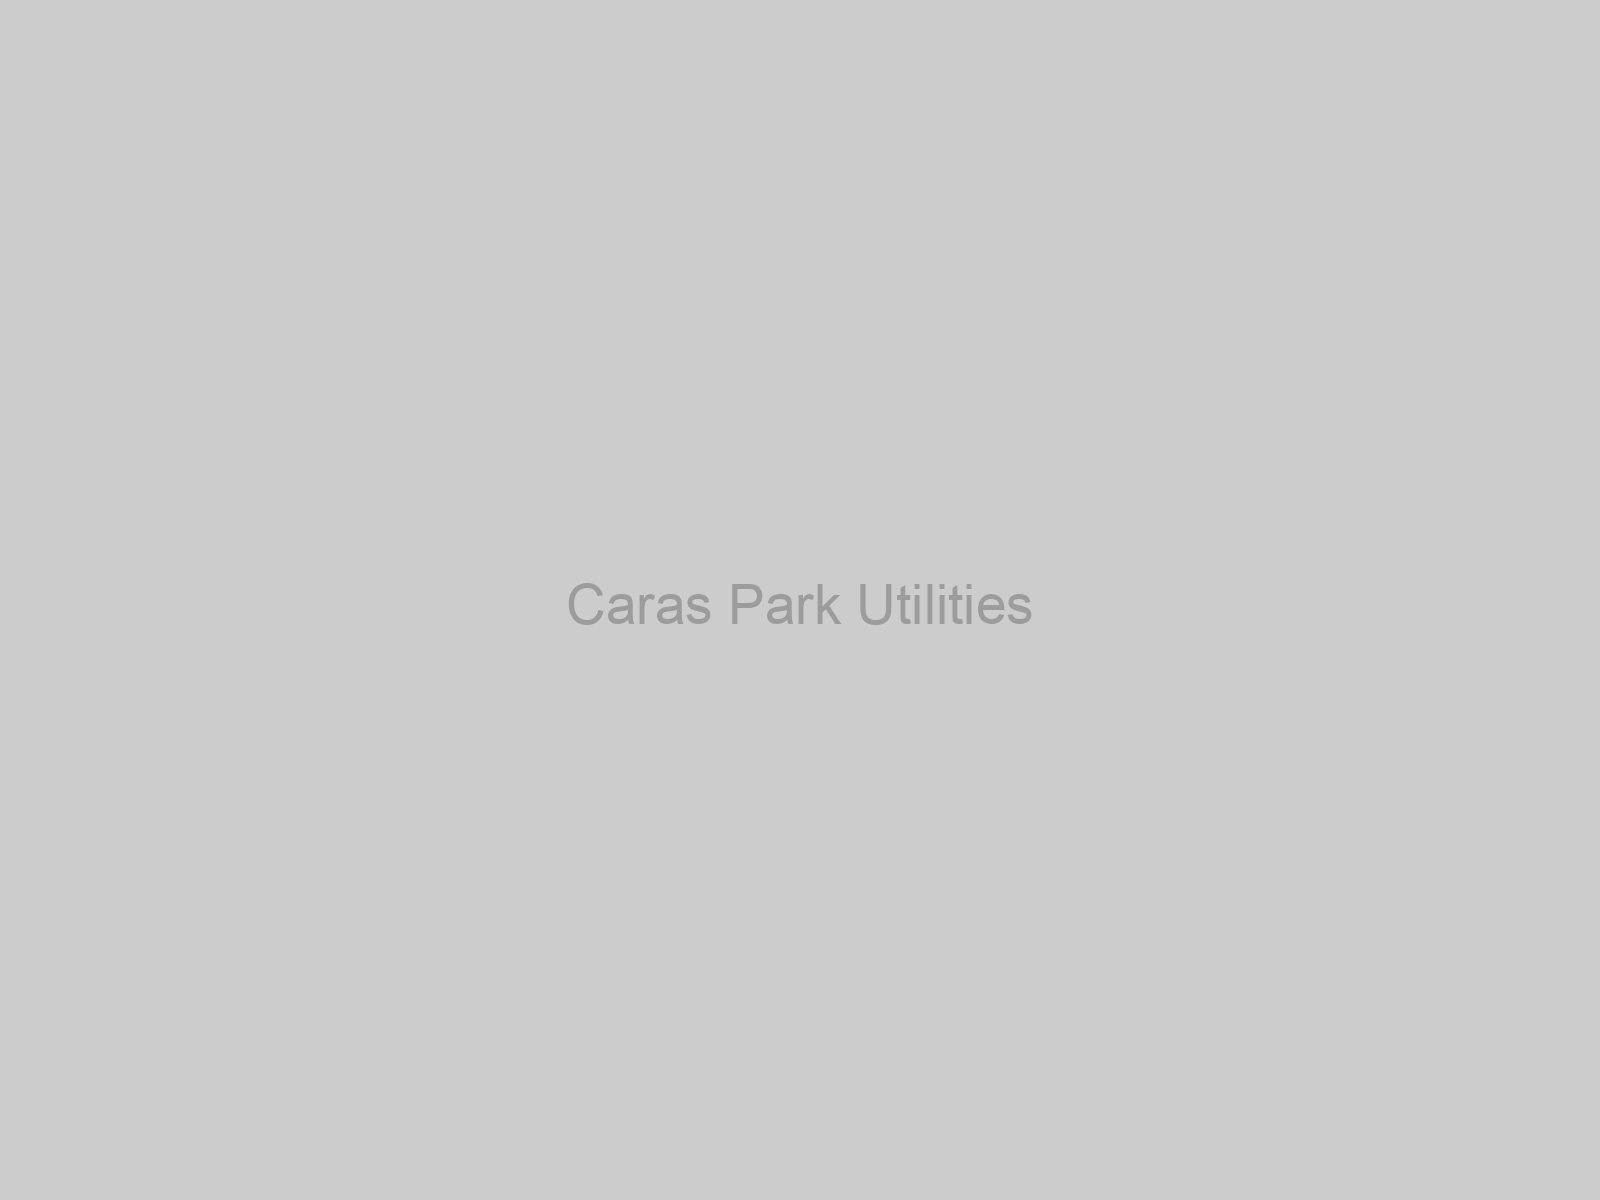 Caras Park Utilities